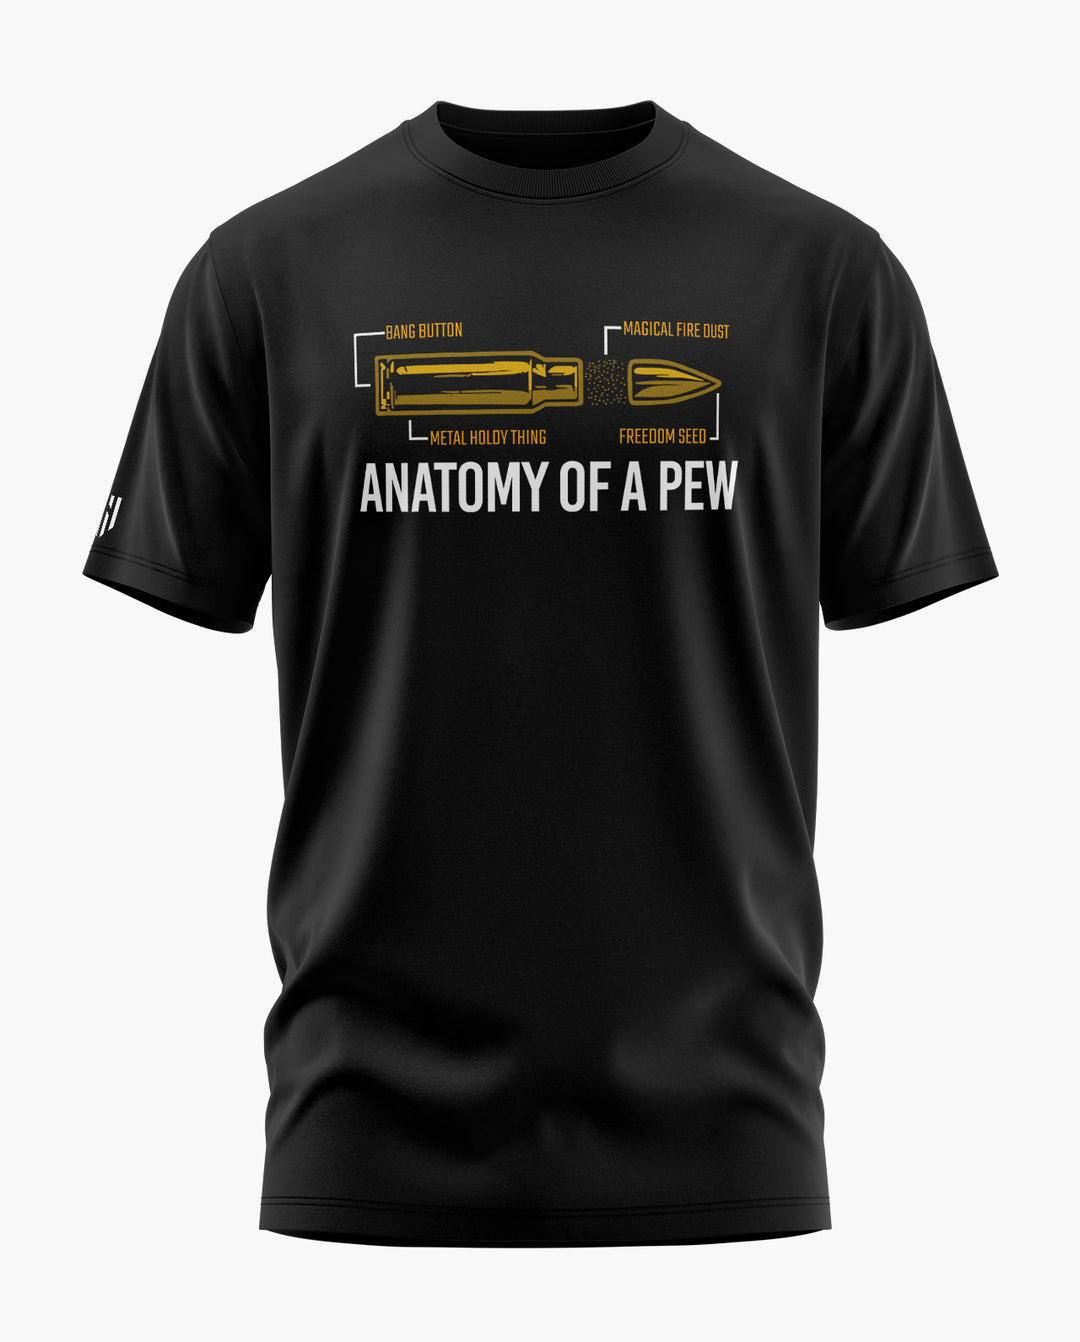 ANATOMY OF A PEW T-Shirt